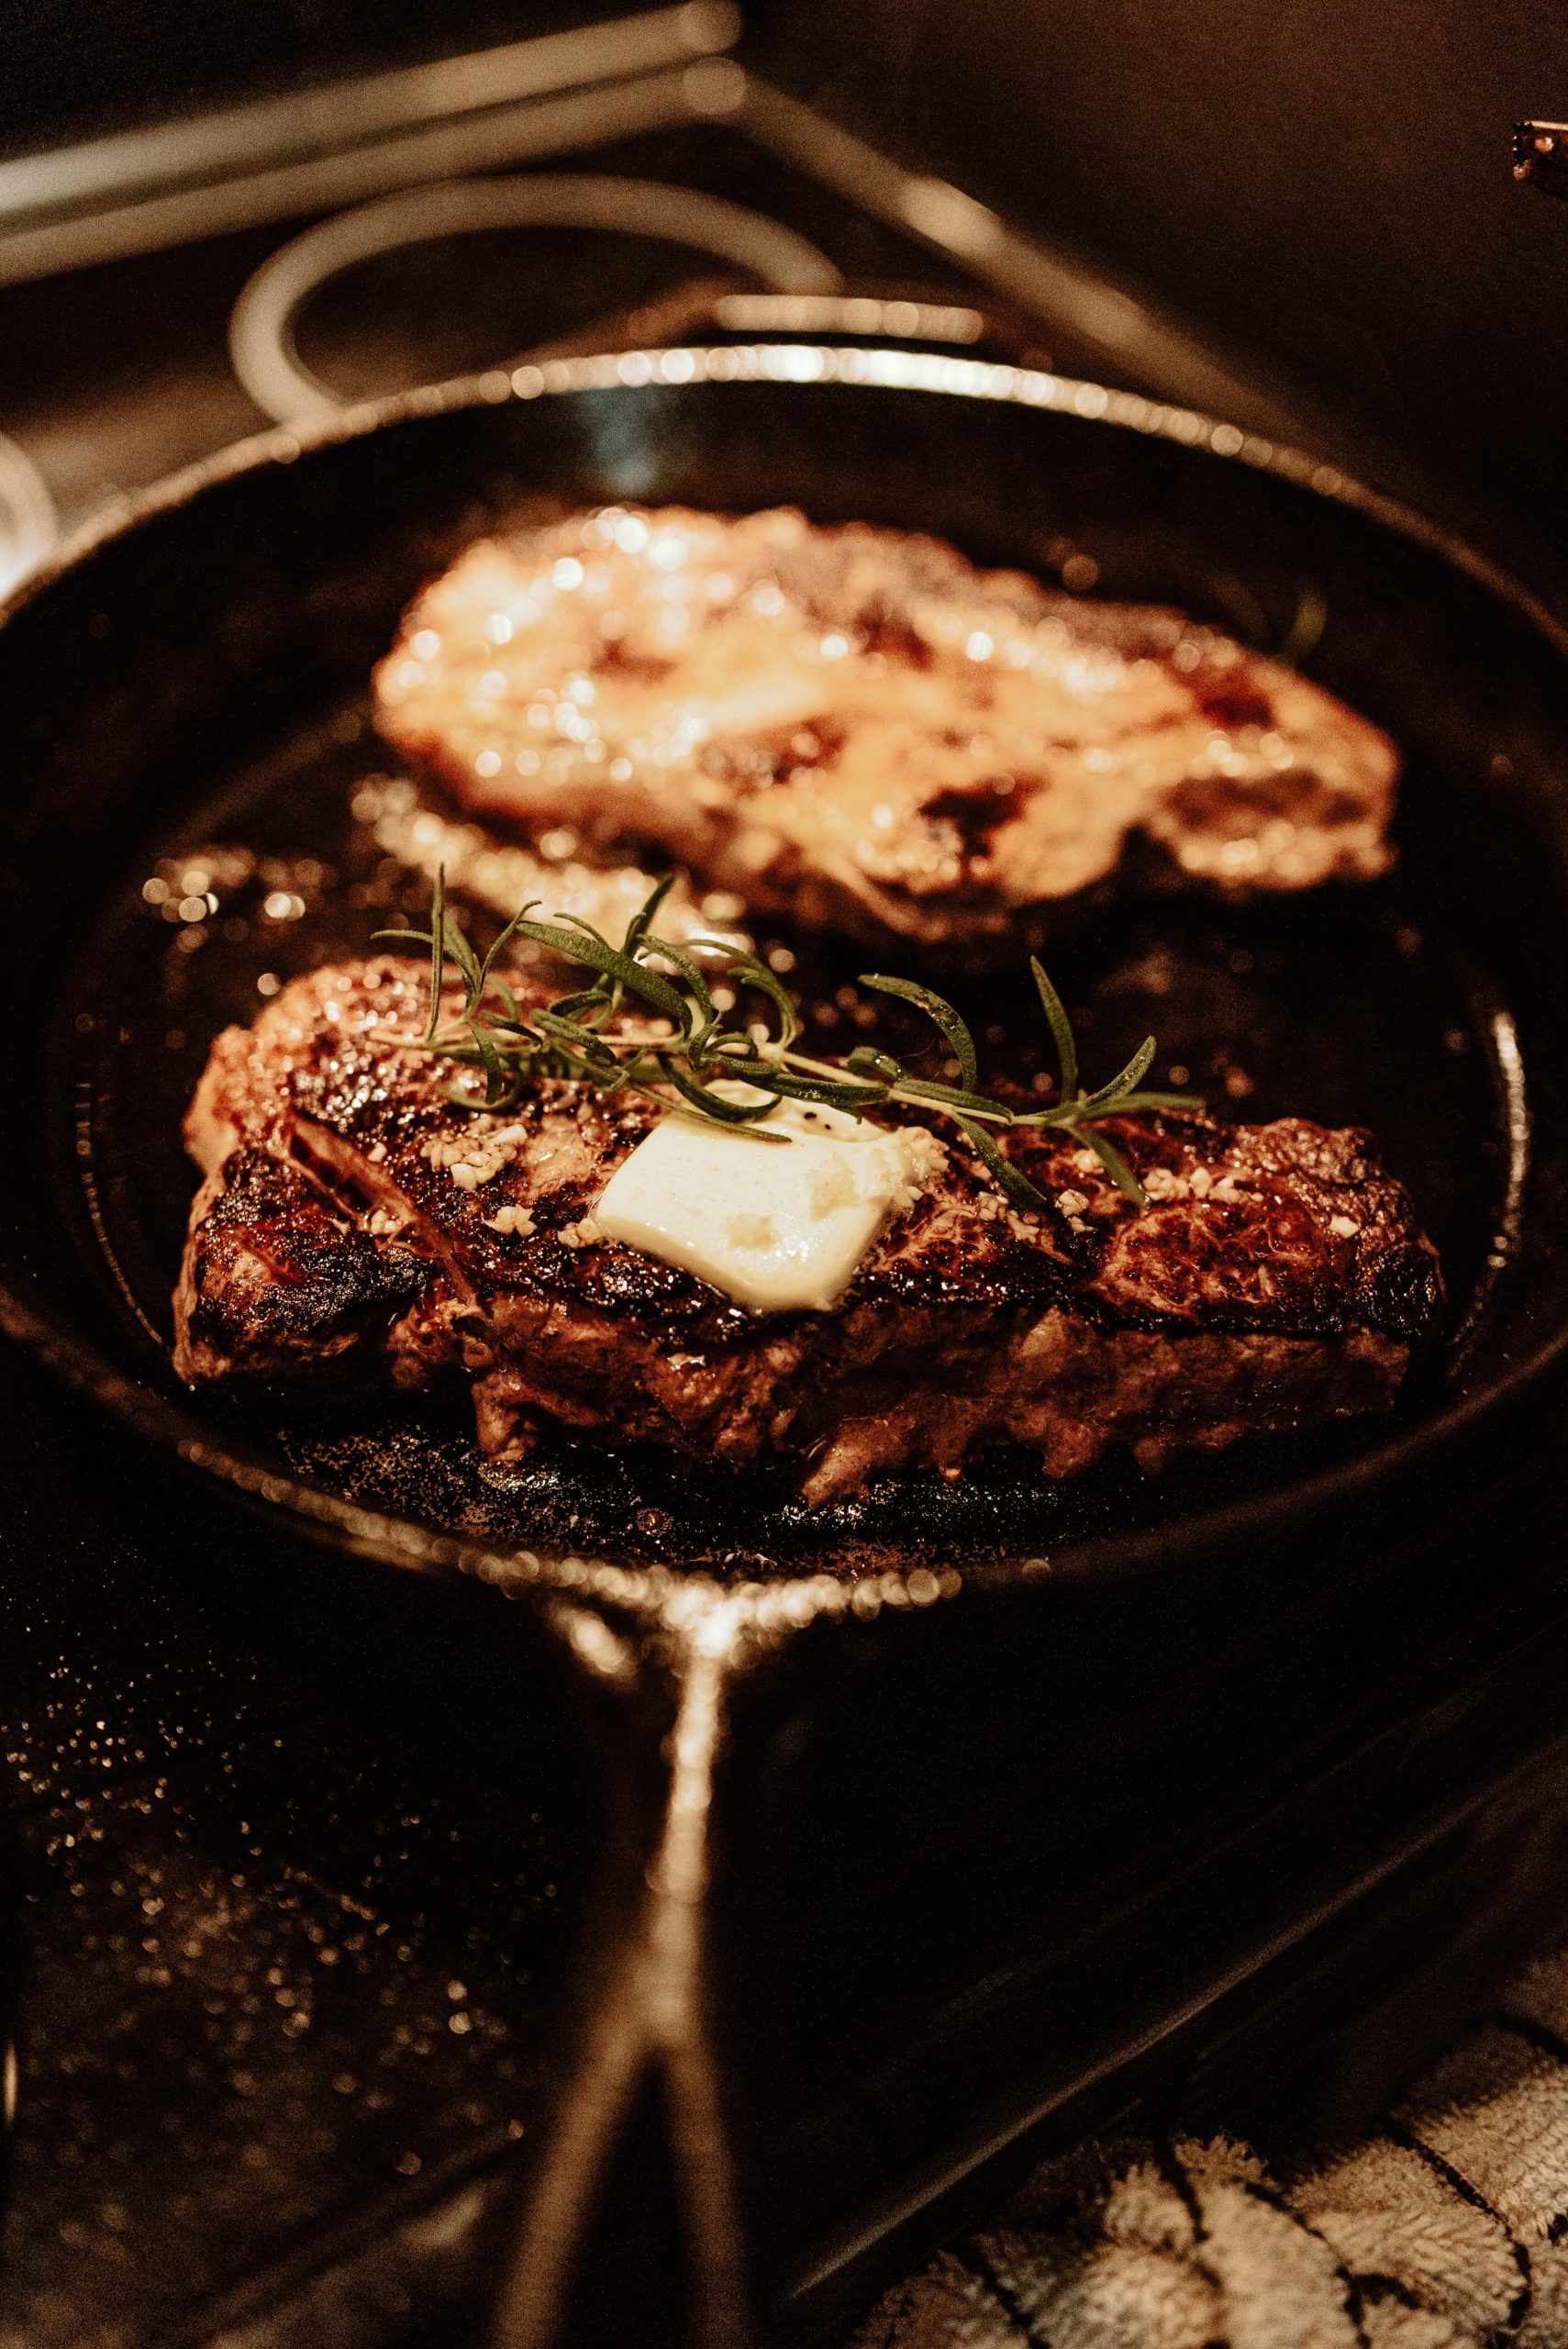 Date Night: Ultimate Steak-cation Class April 16th